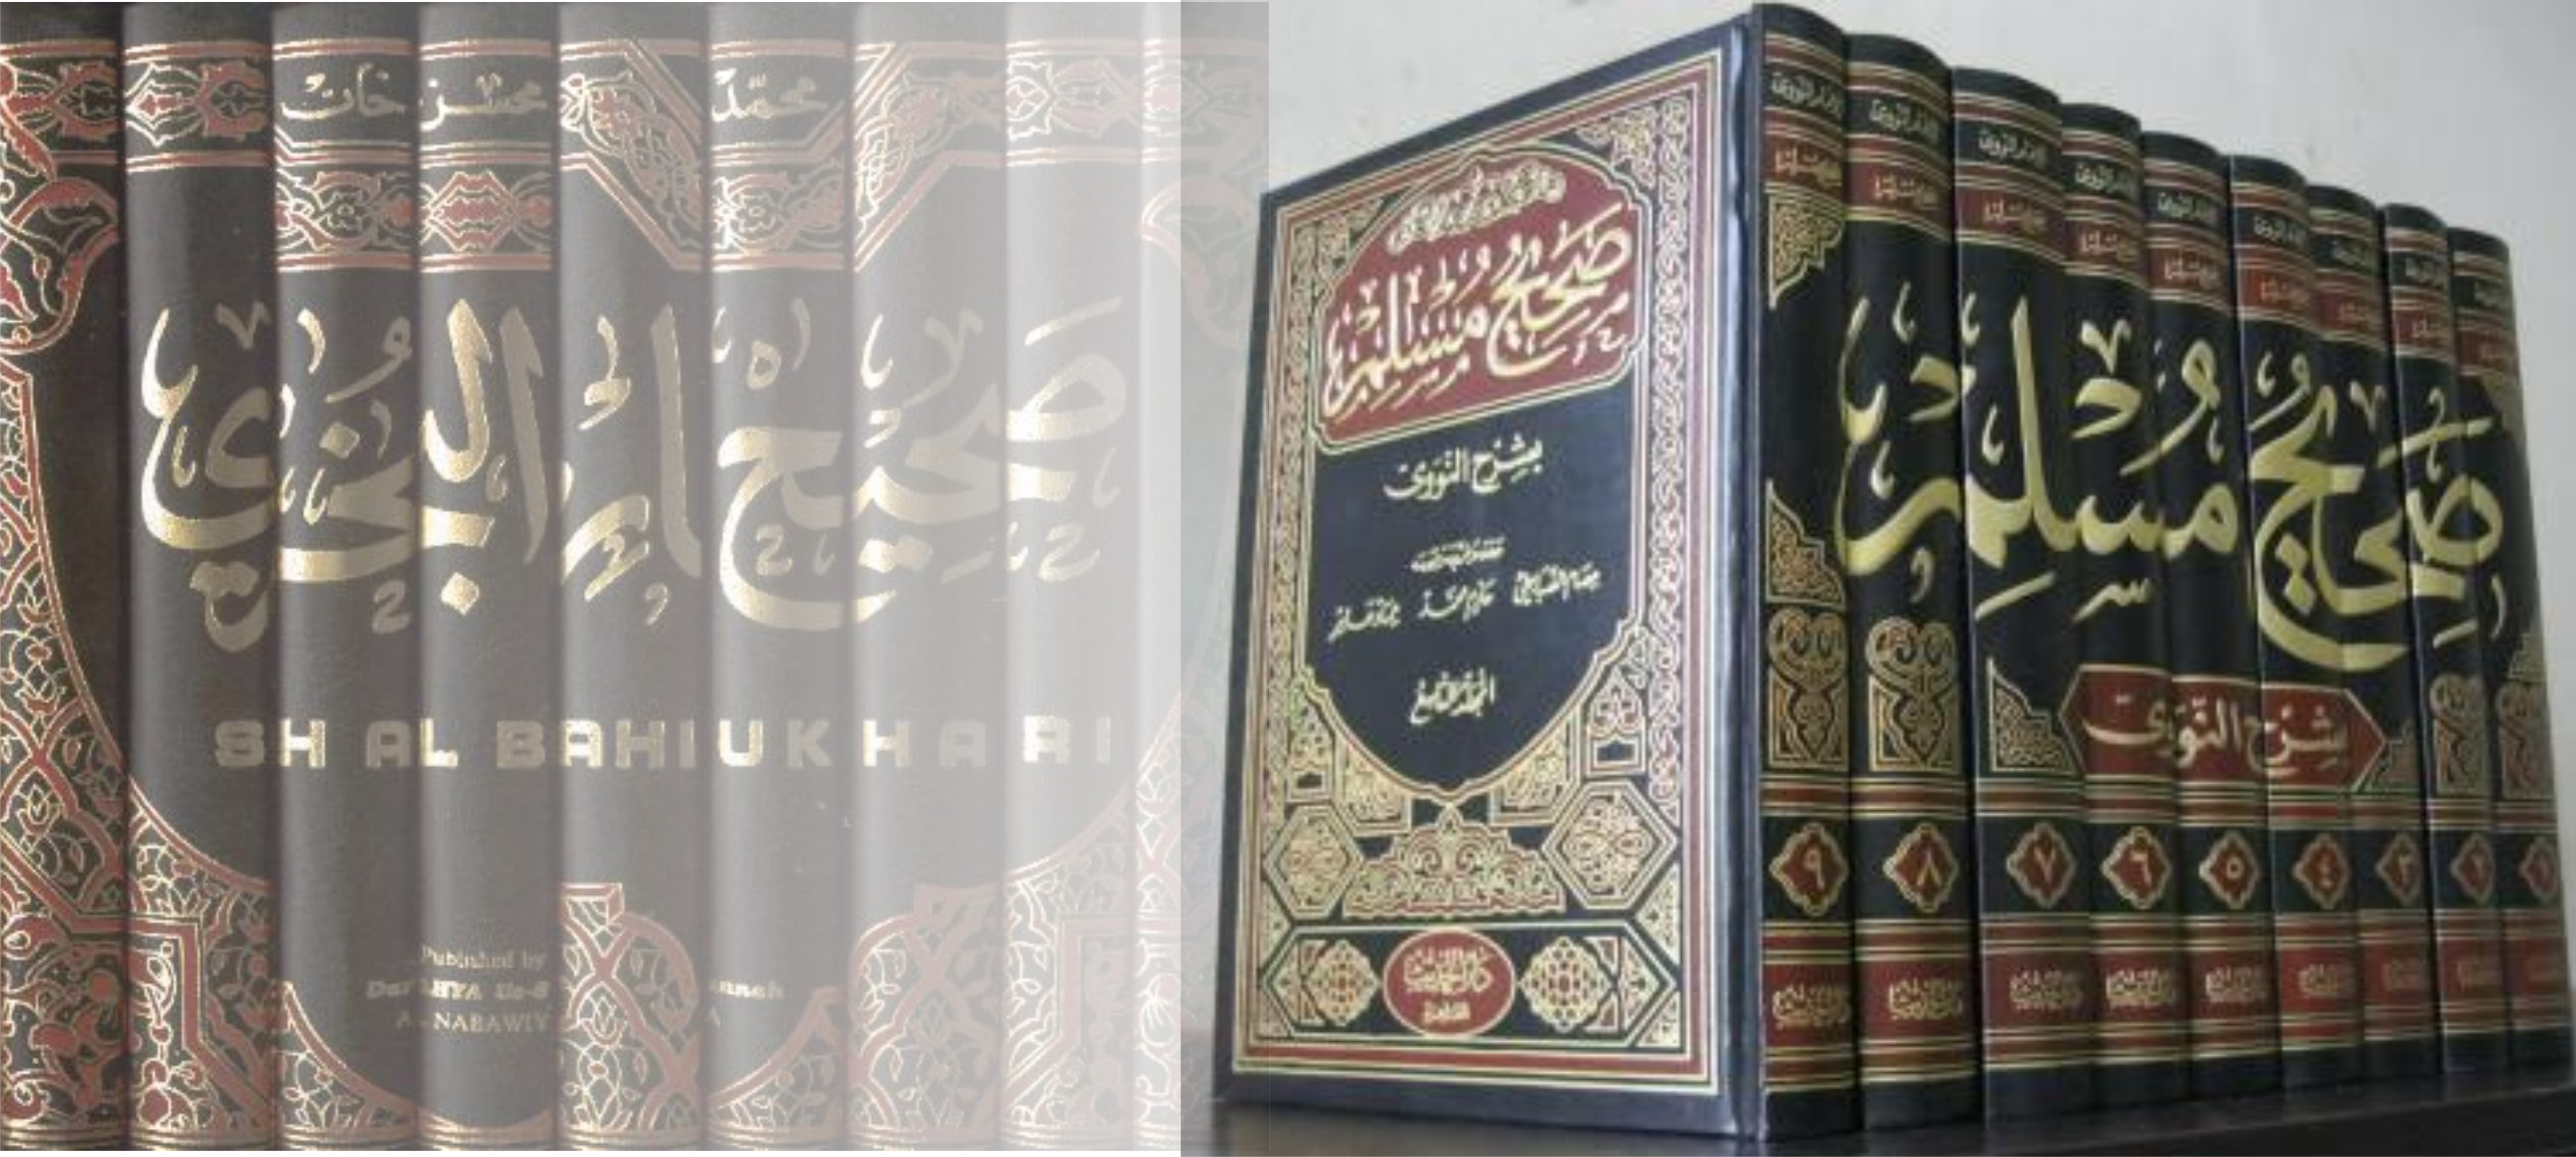 Ас сахих аль. Сборник Сахих Аль Бухари. Книга сборник хадисов Аль Бухари.